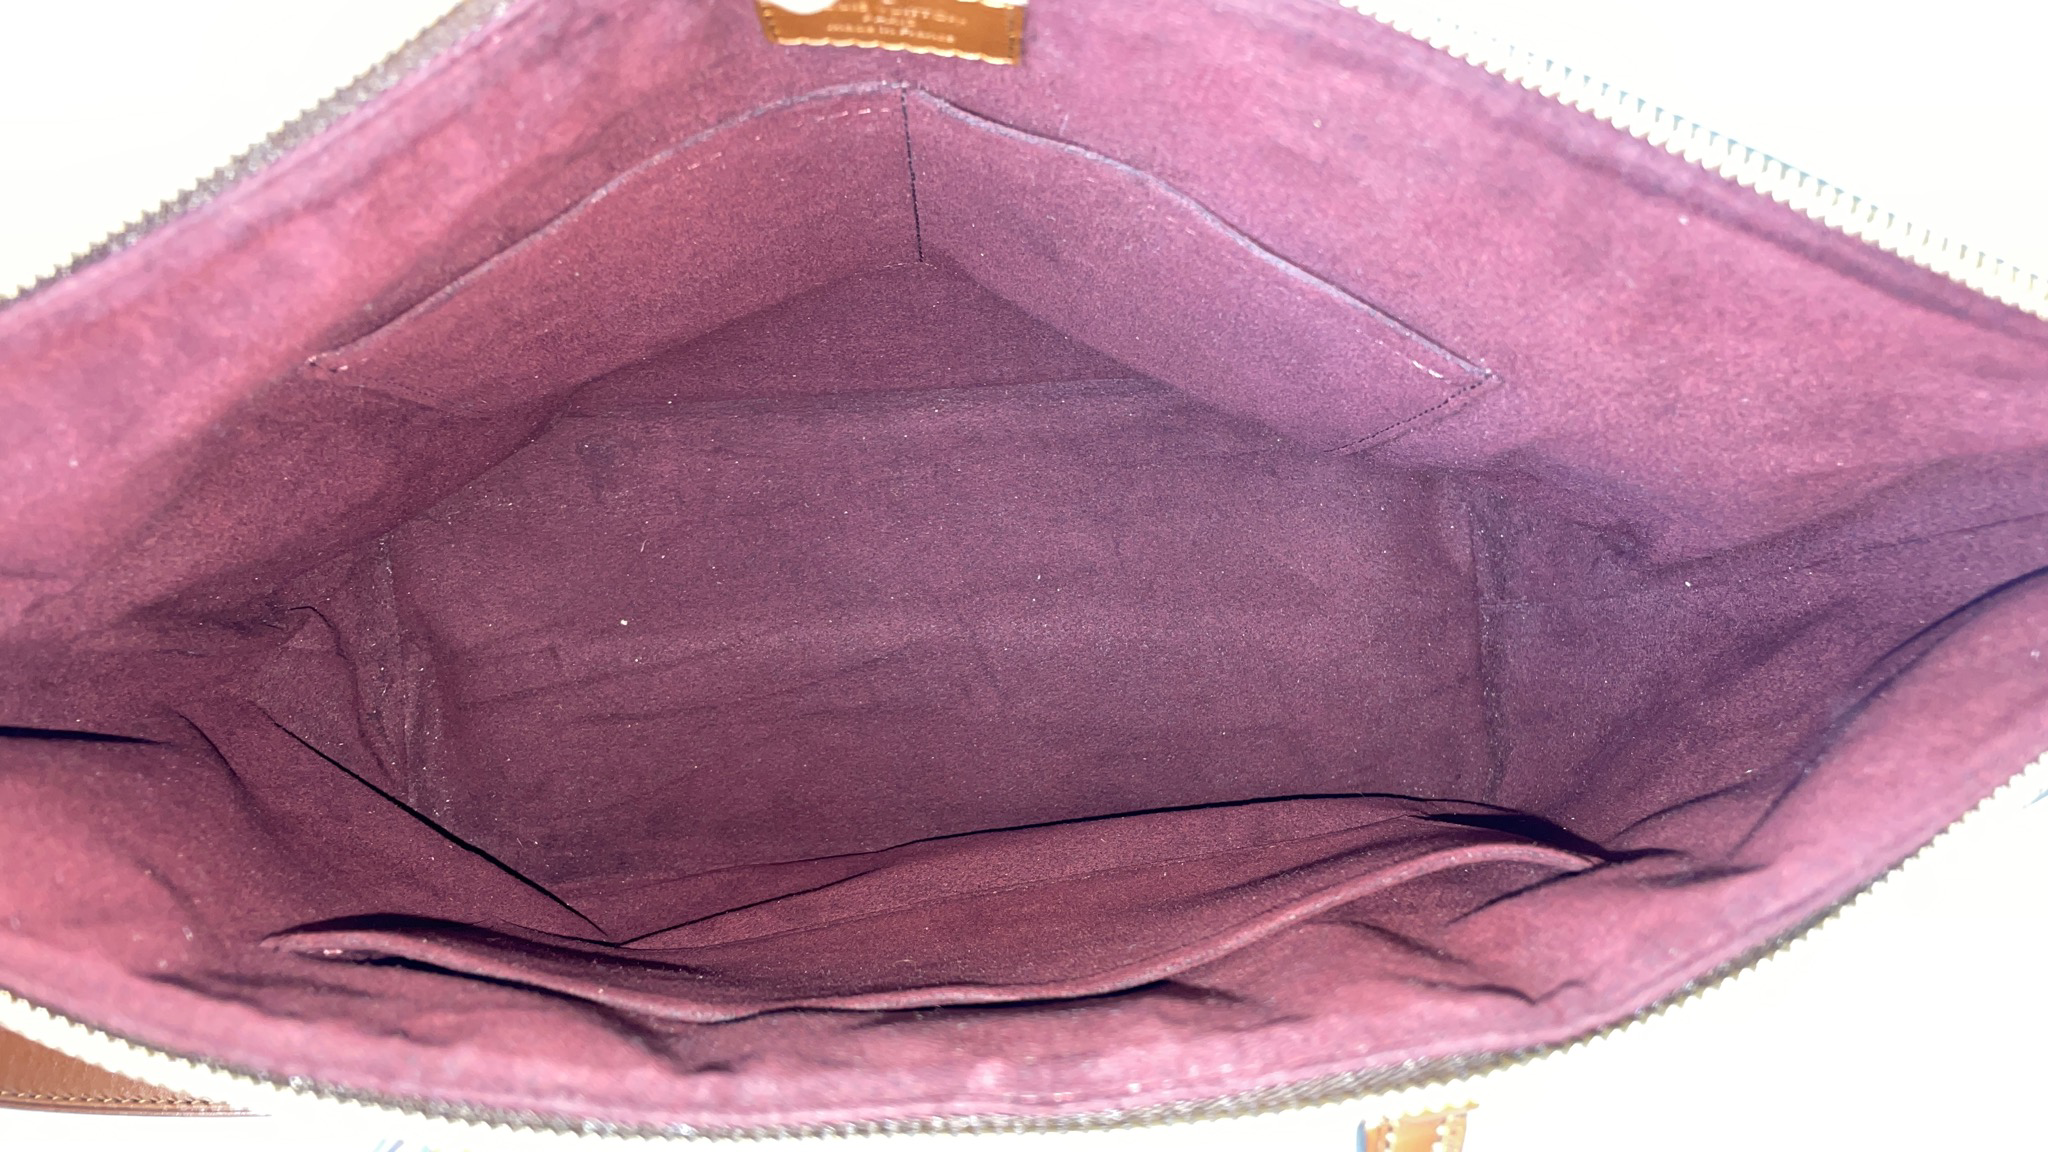 Bonhams : Going For GoldSport-Themed Handbags by Louis Vuitton At Bonhams  Luxury Online Sale